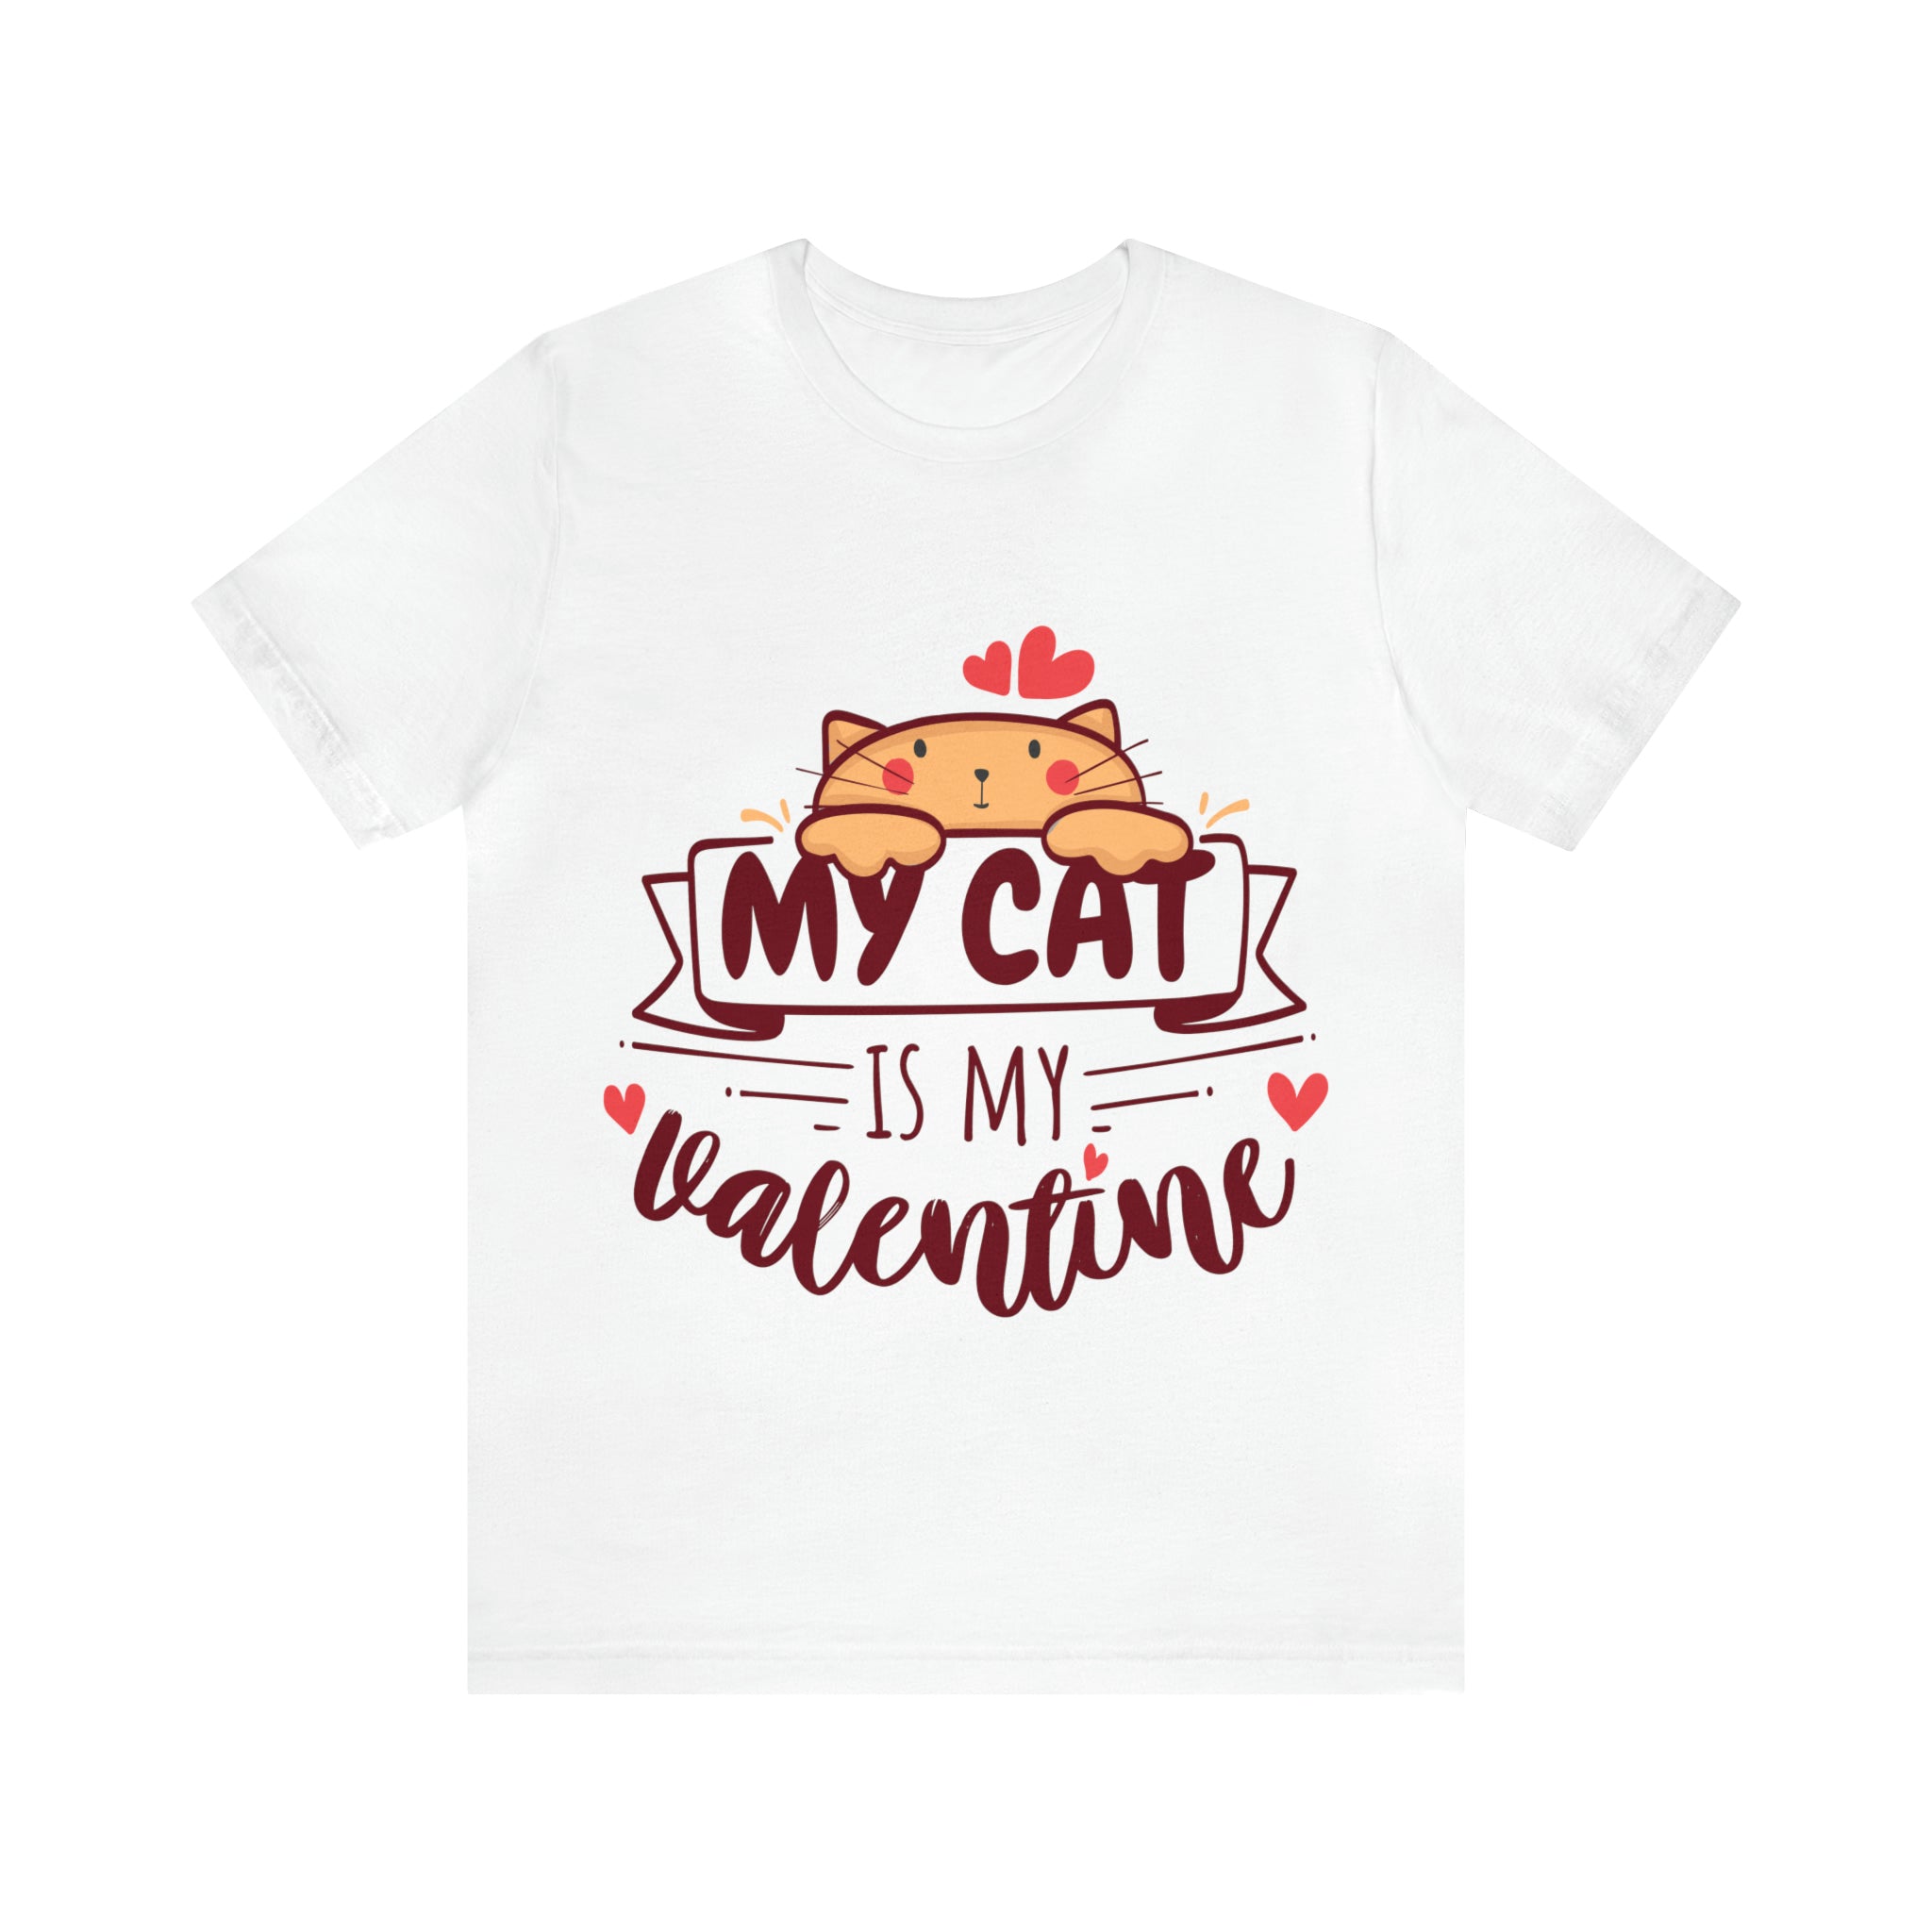 My Cat is my Valentine t-shirt - white